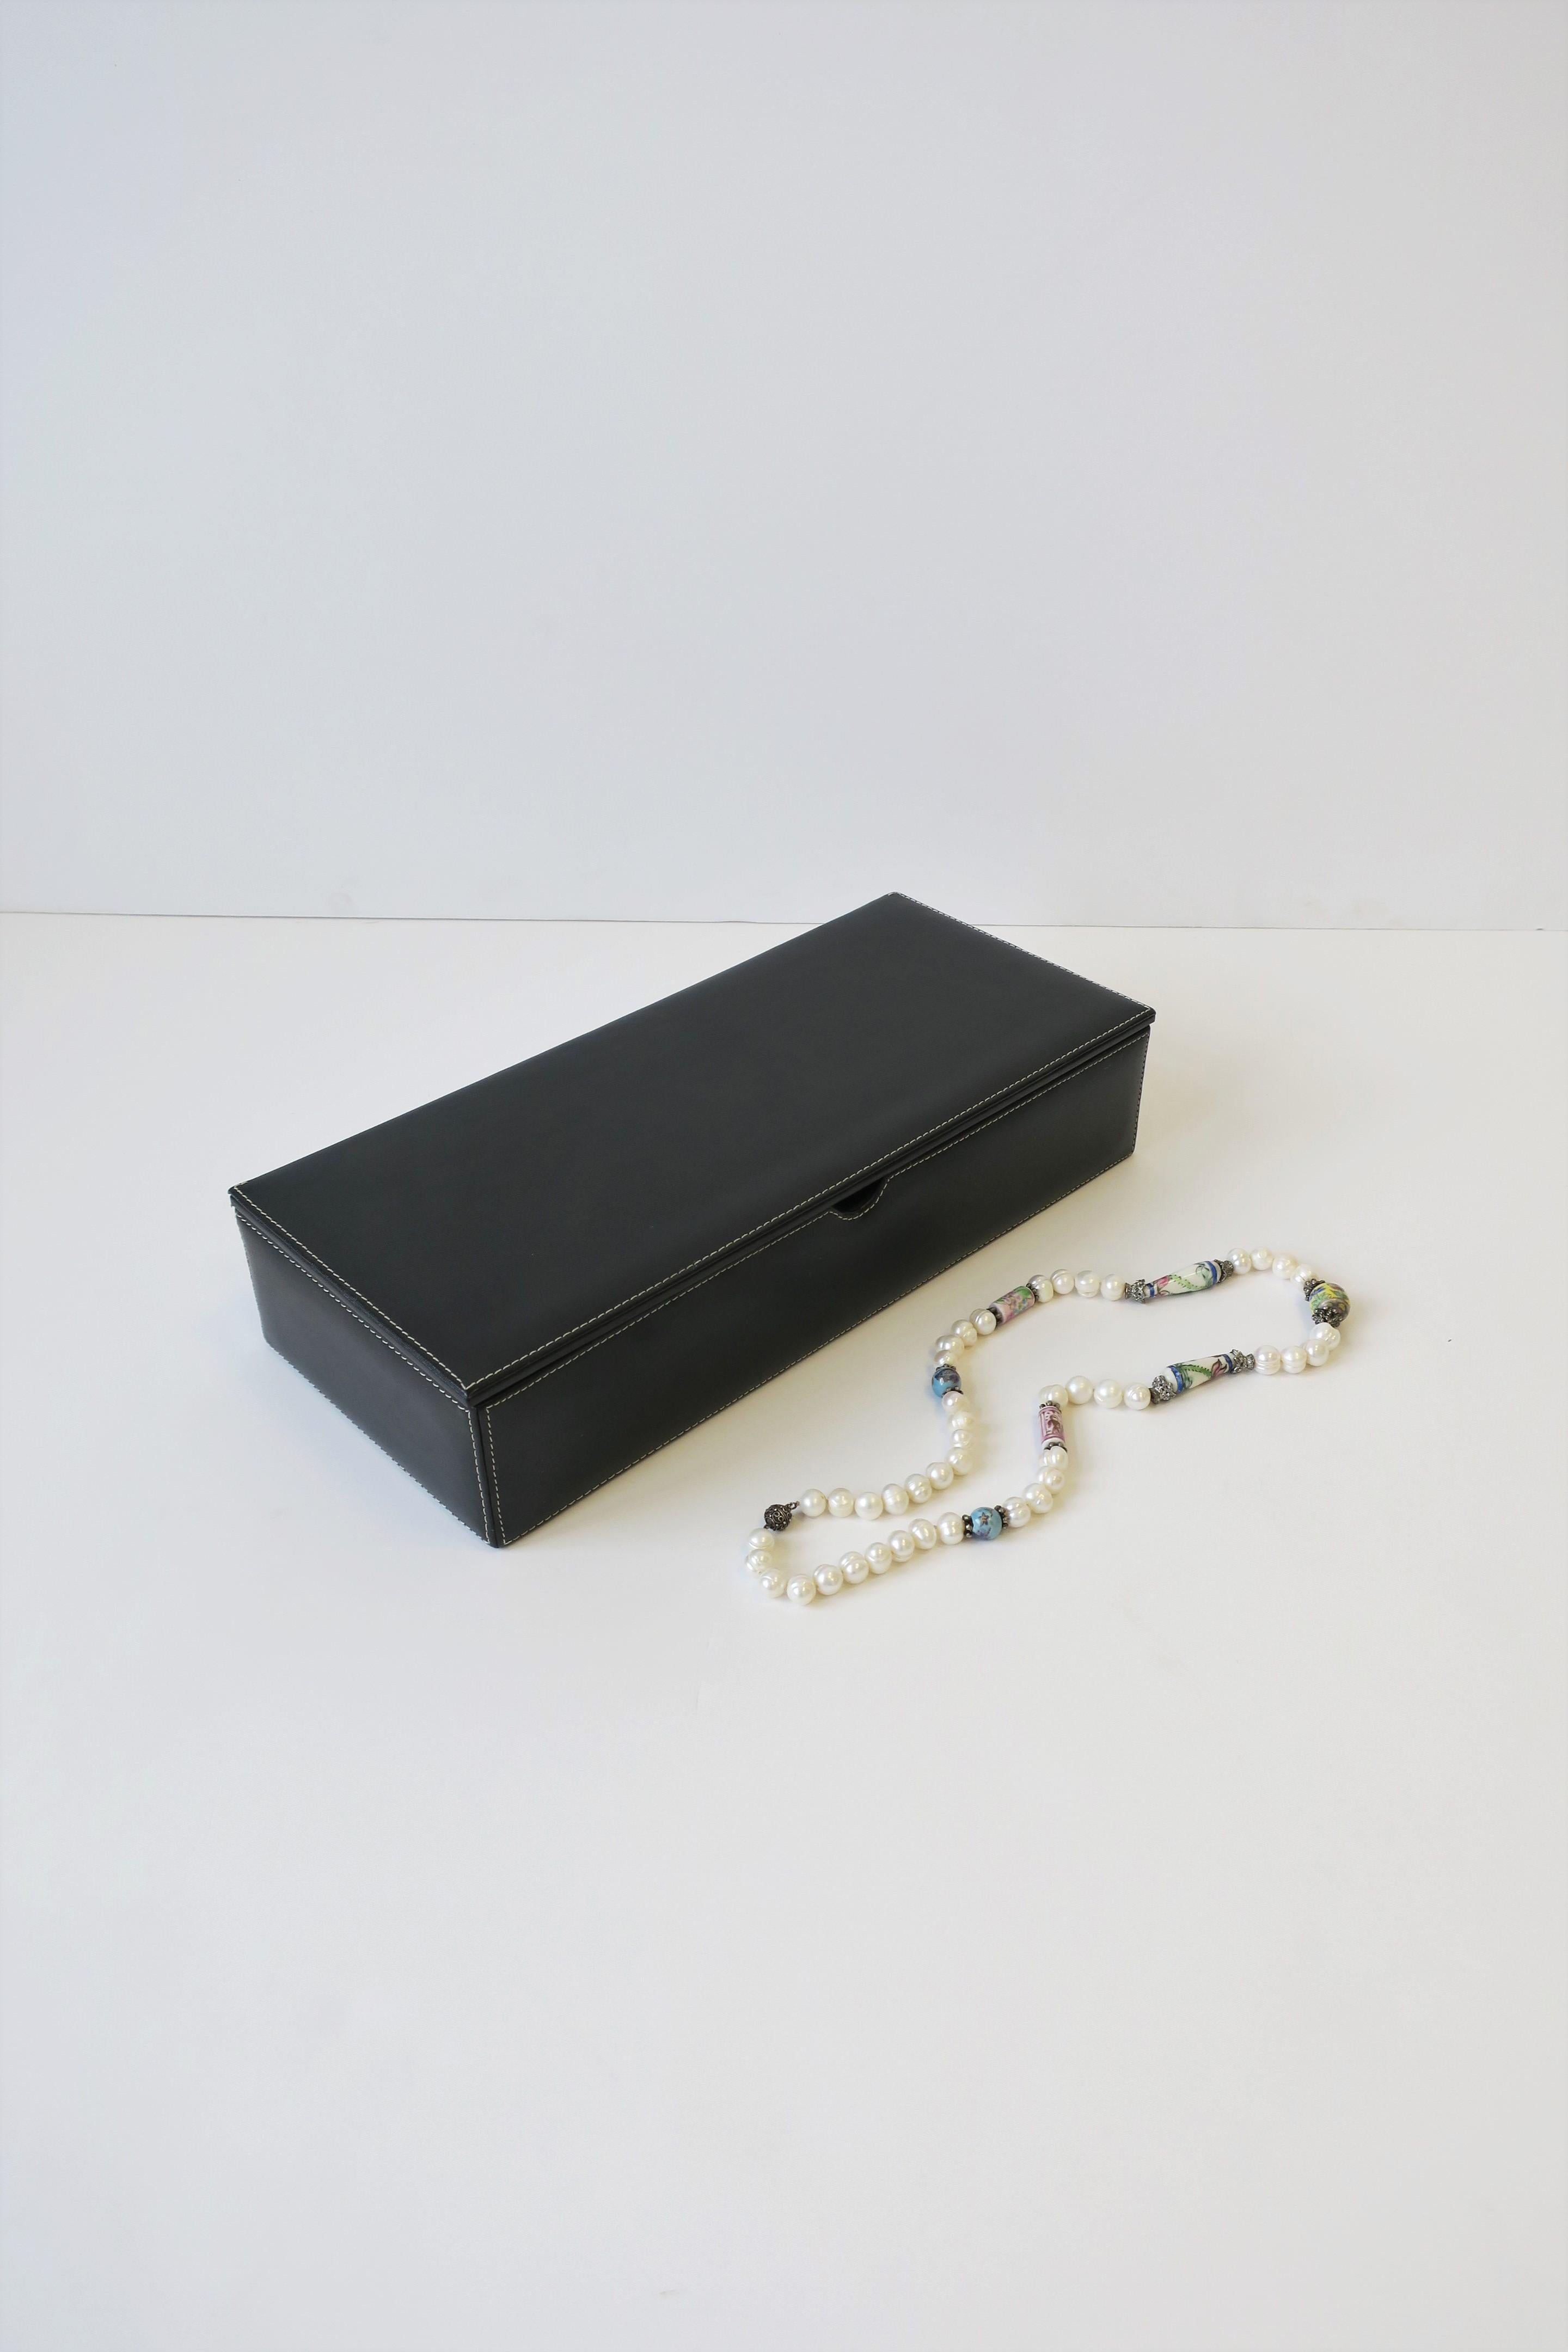 Black Leather Jewelry or Desk Box 1